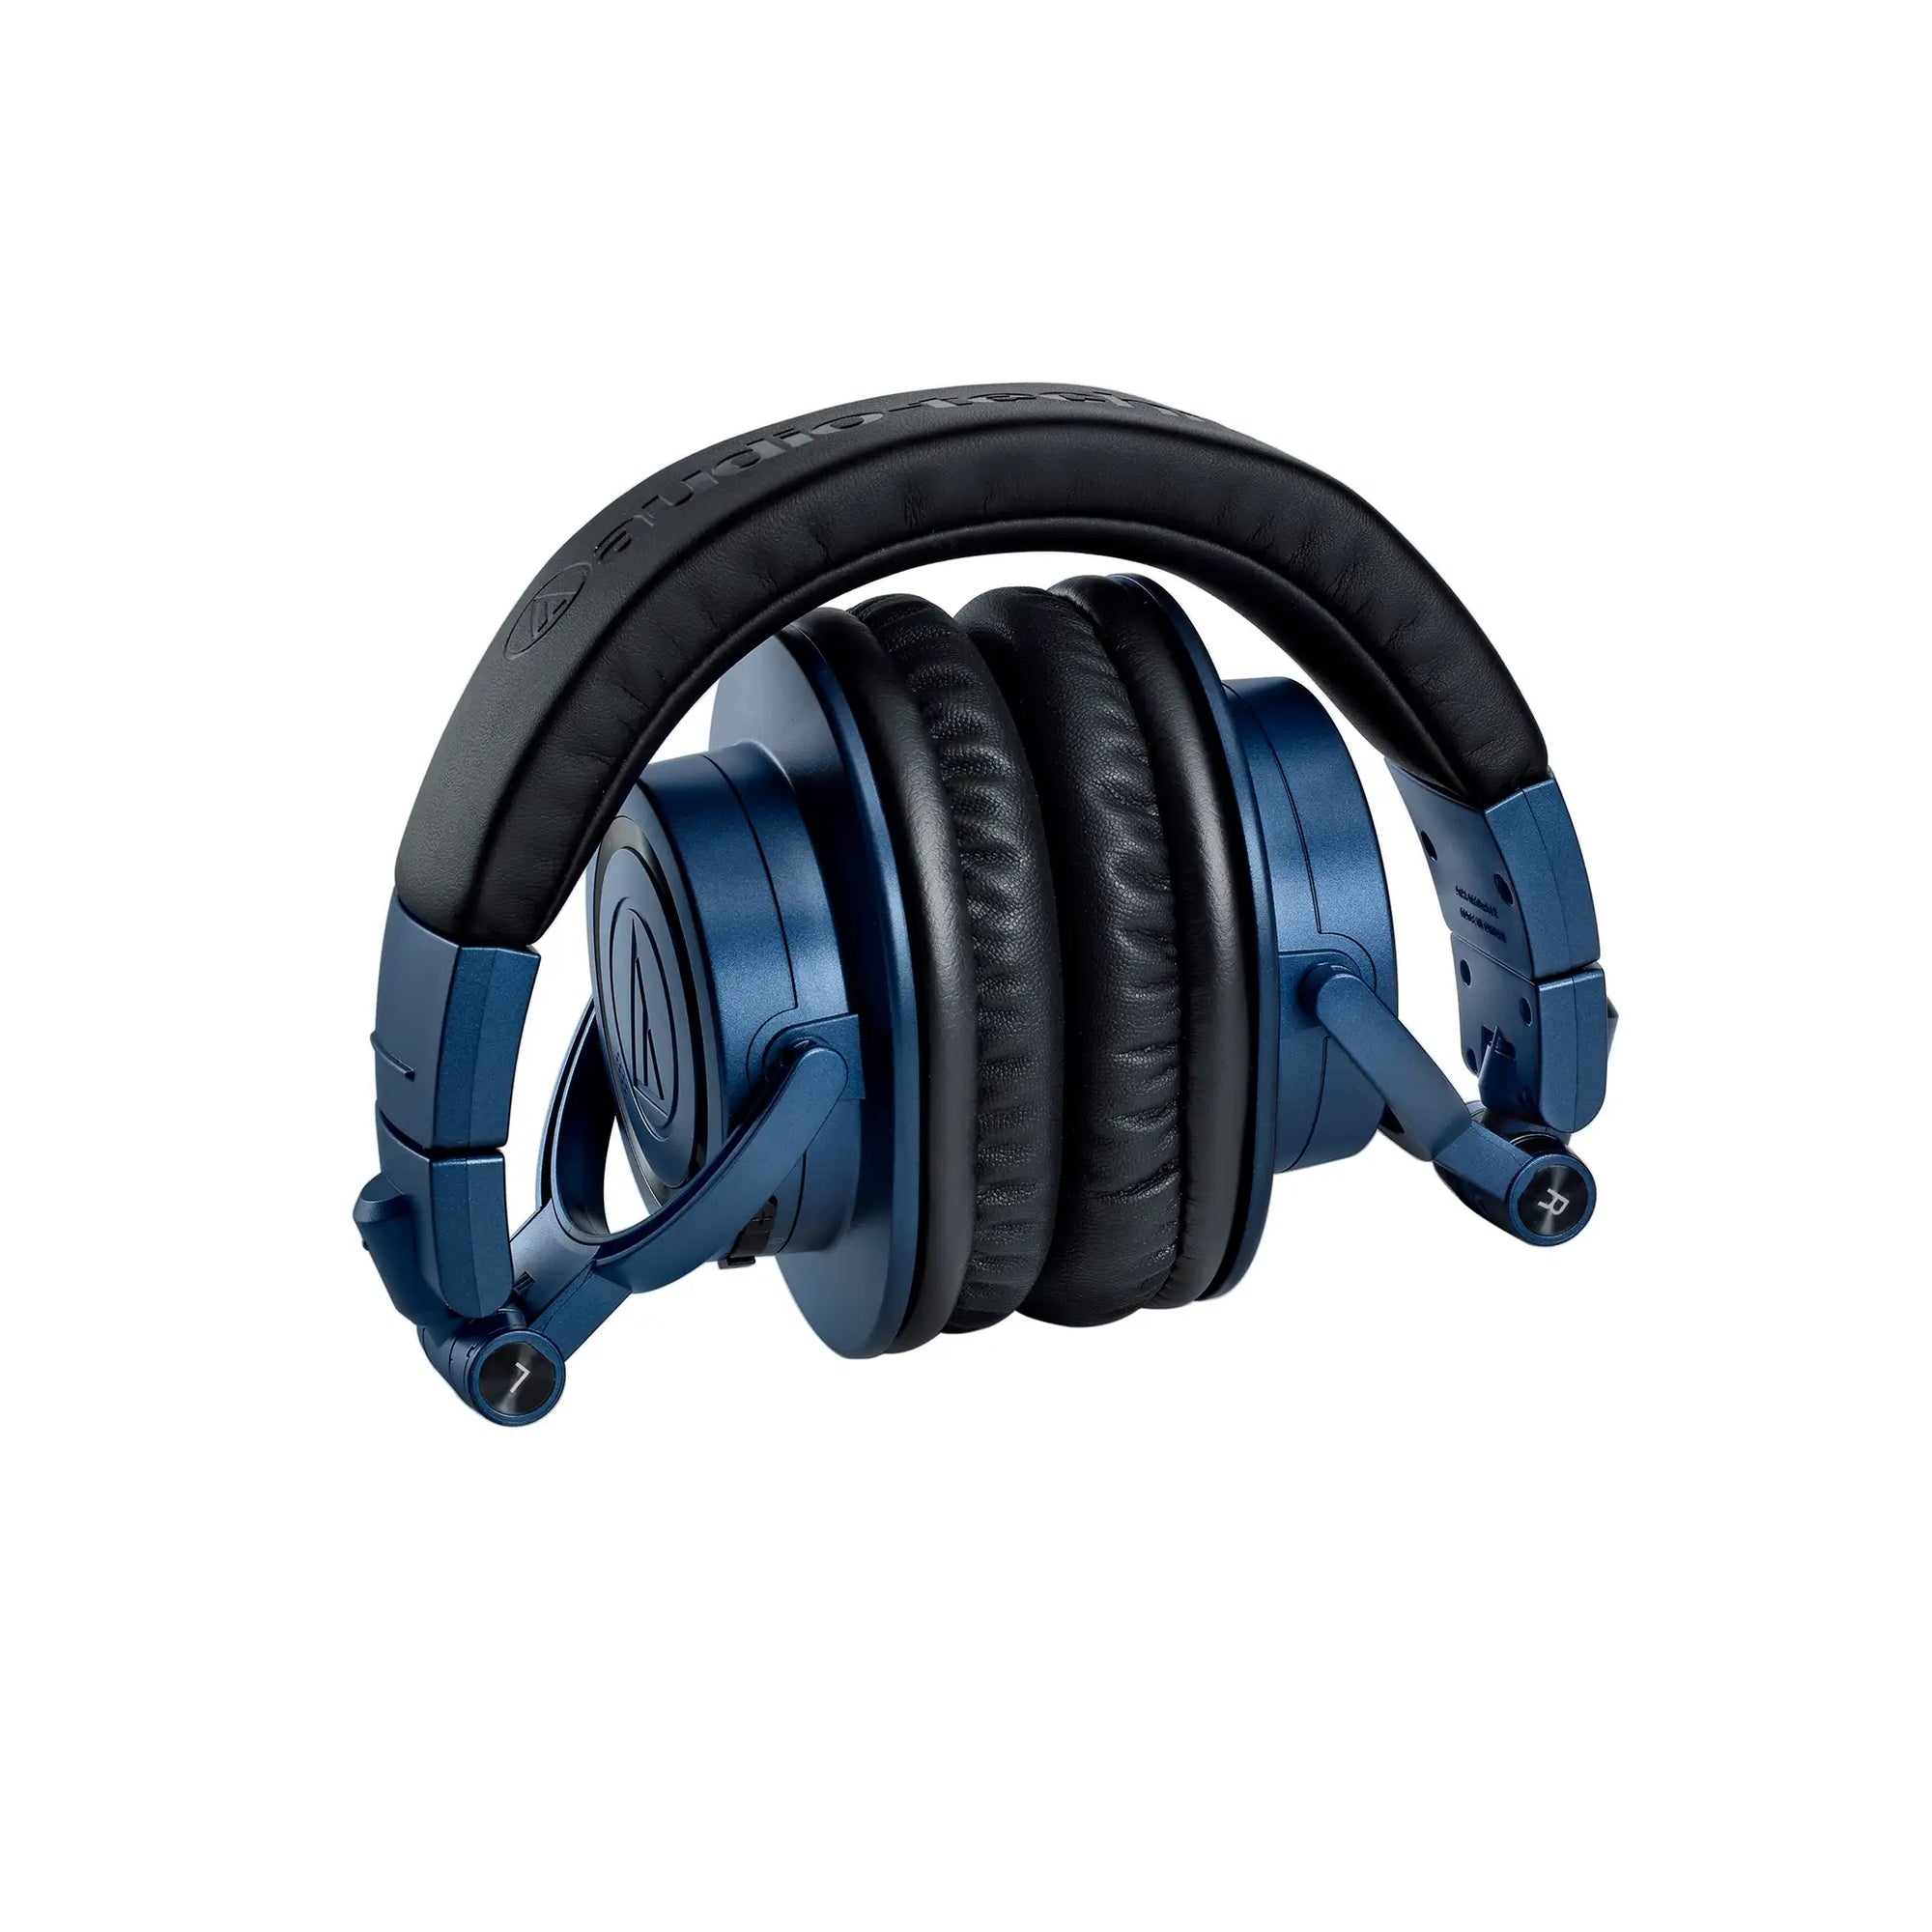 Audio Technica ATH-M50xBT2 Wireless Over-Ear Headphones - ATH-M50XBT2